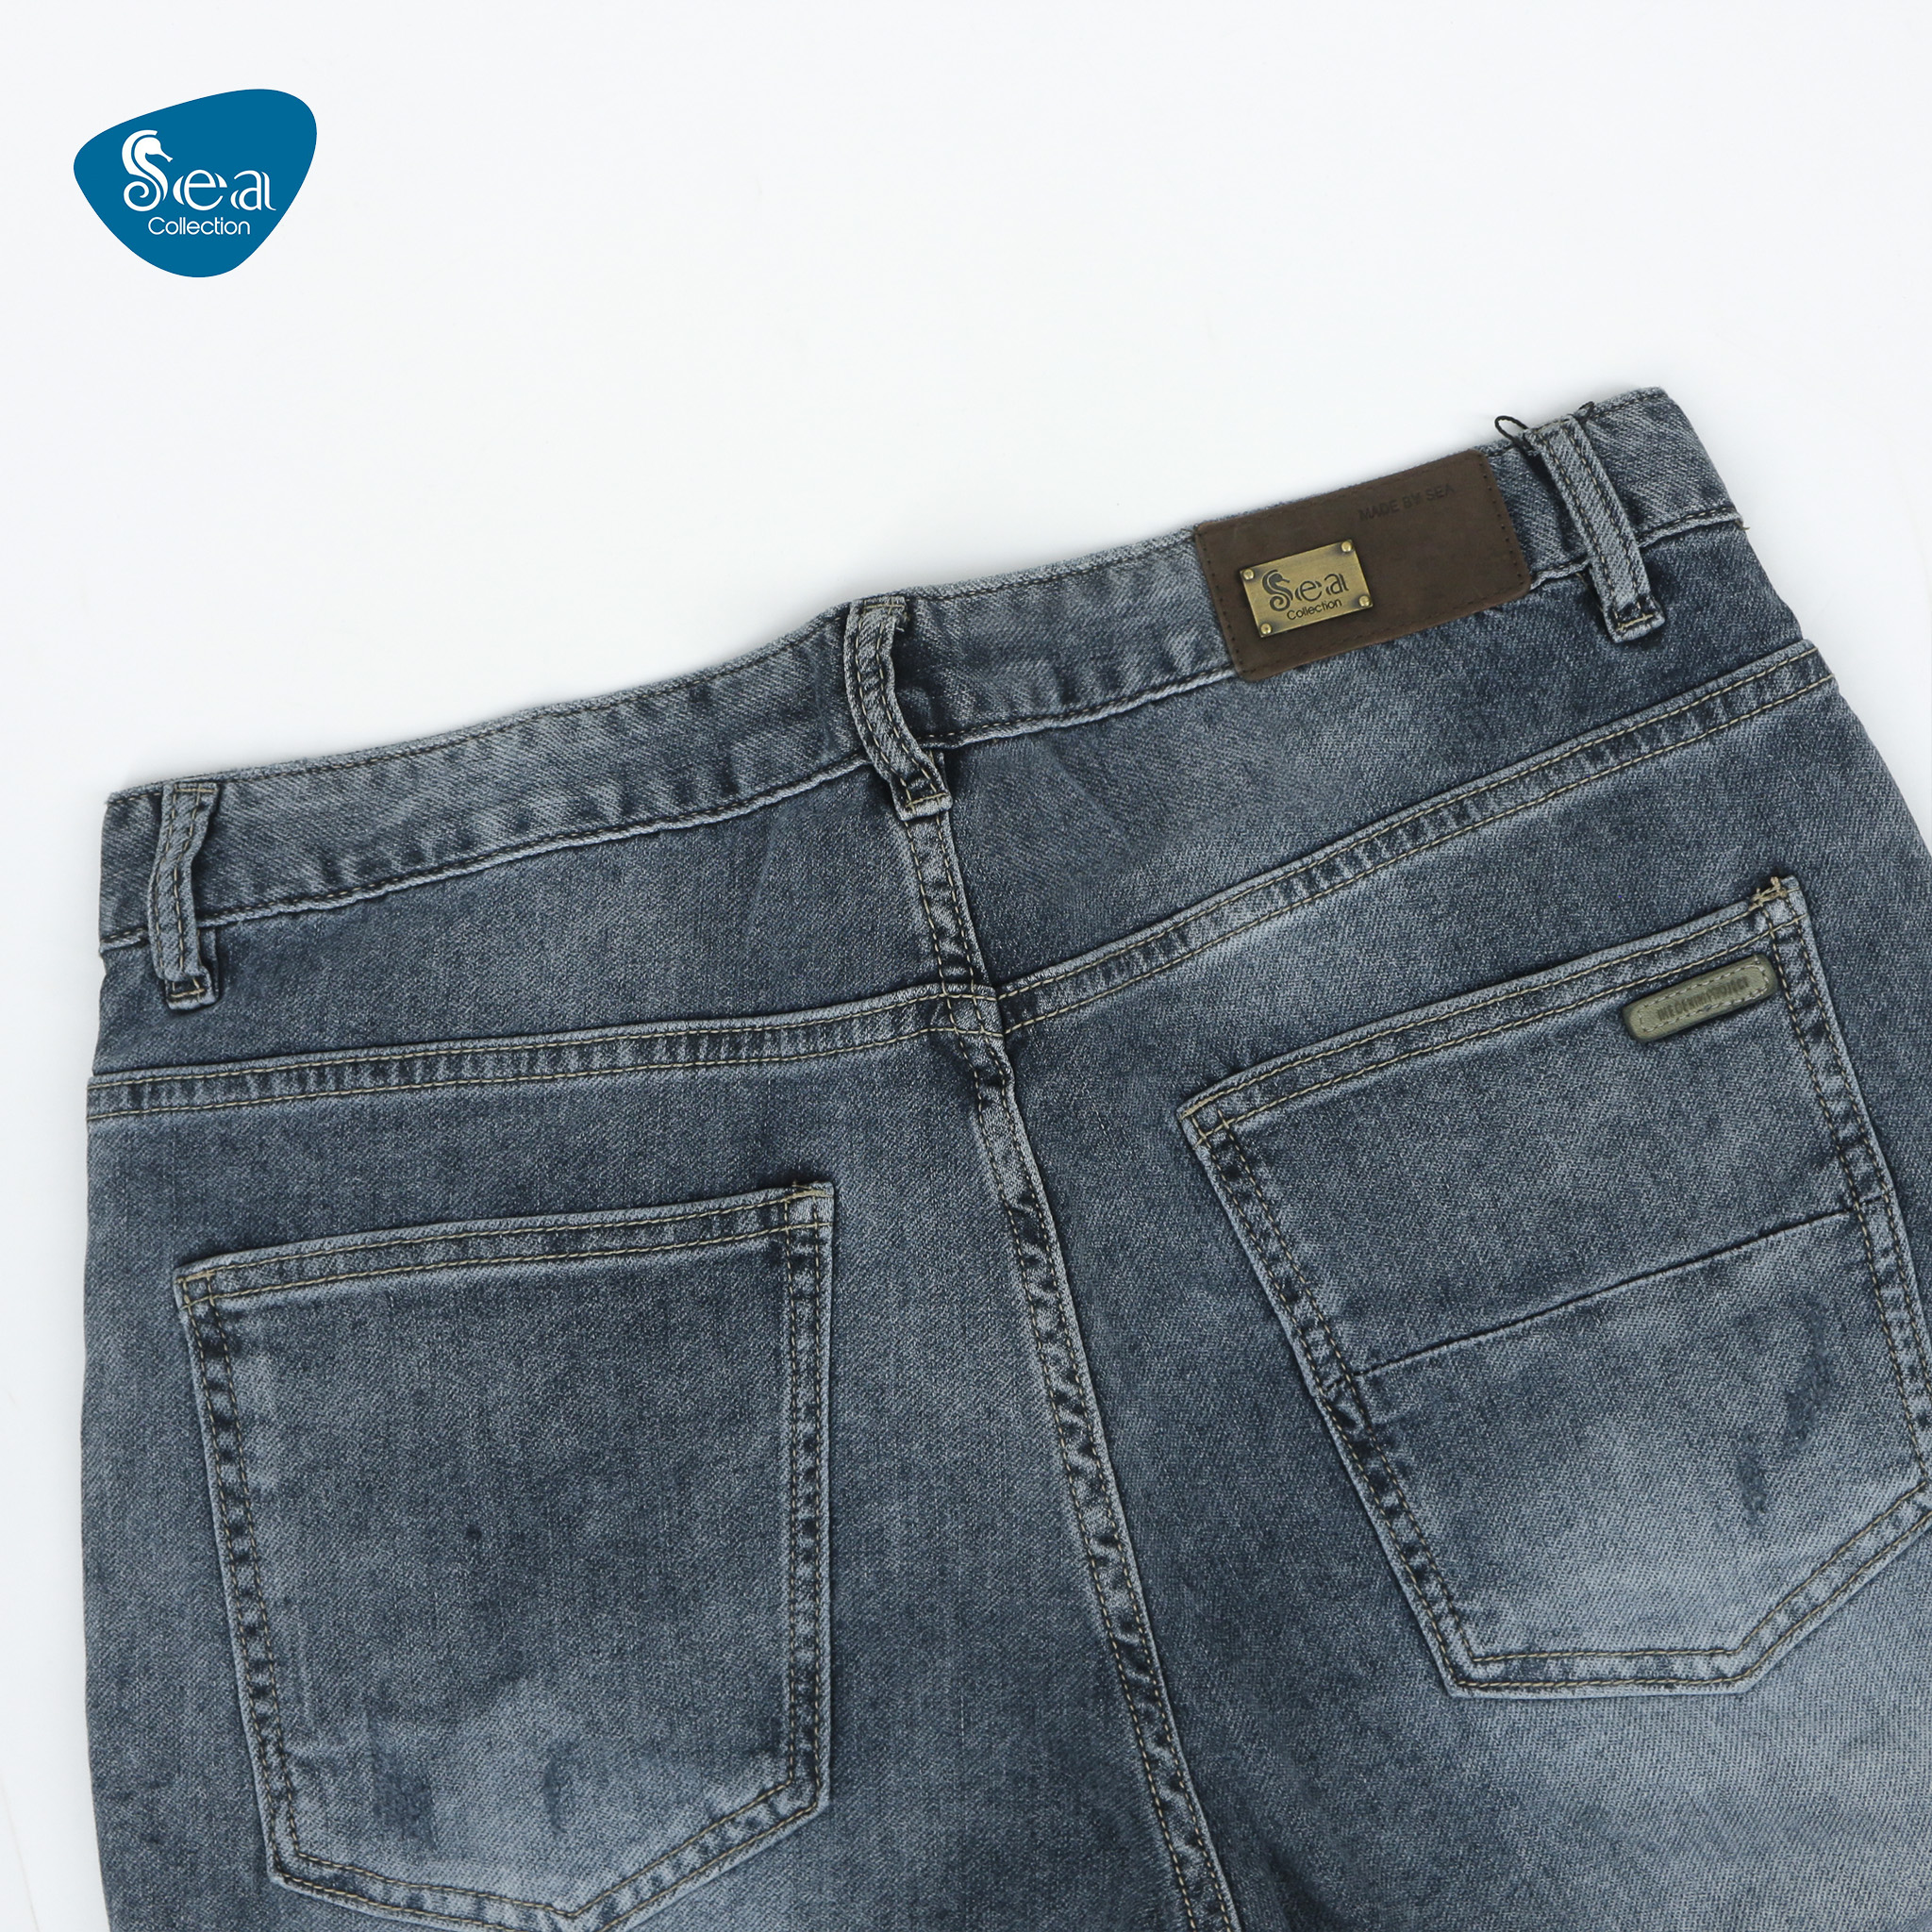 Quần Jeans Nam Sea Collection vải denim mềm mại, co giãn nhẹ, form REGULAR 8242